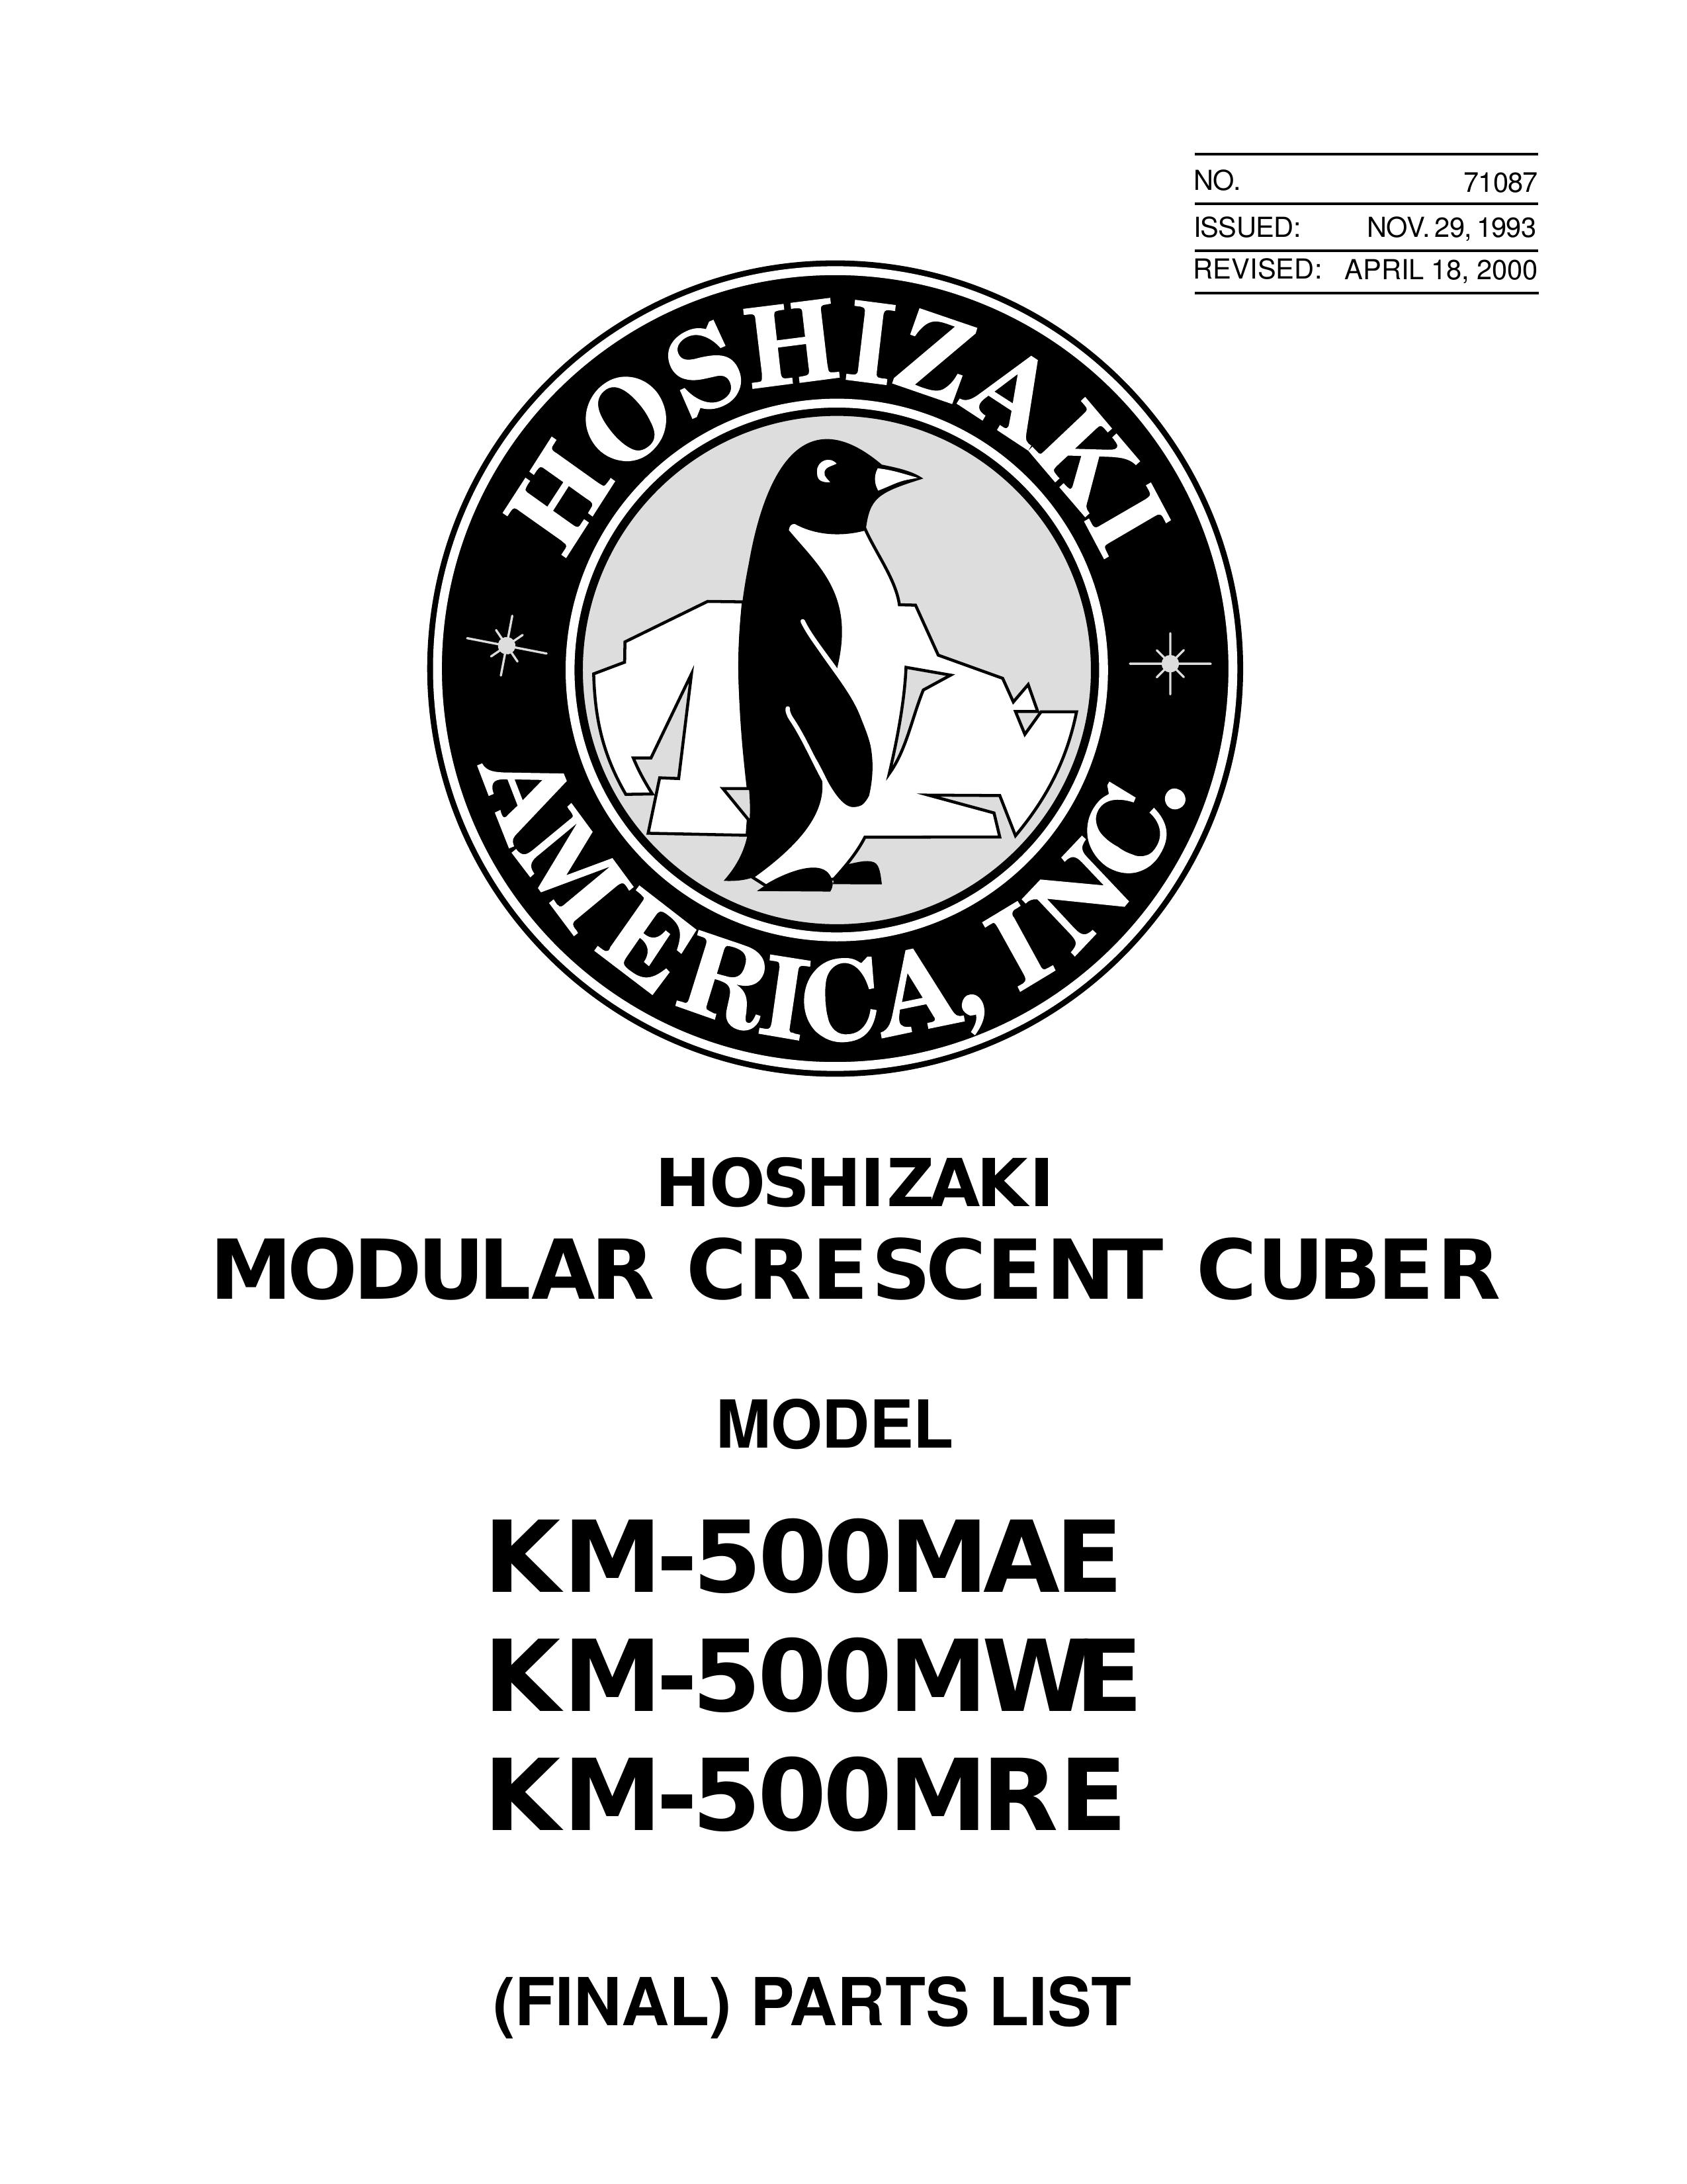 Hoshizaki KM-500MAE Scuba Diving Equipment User Manual